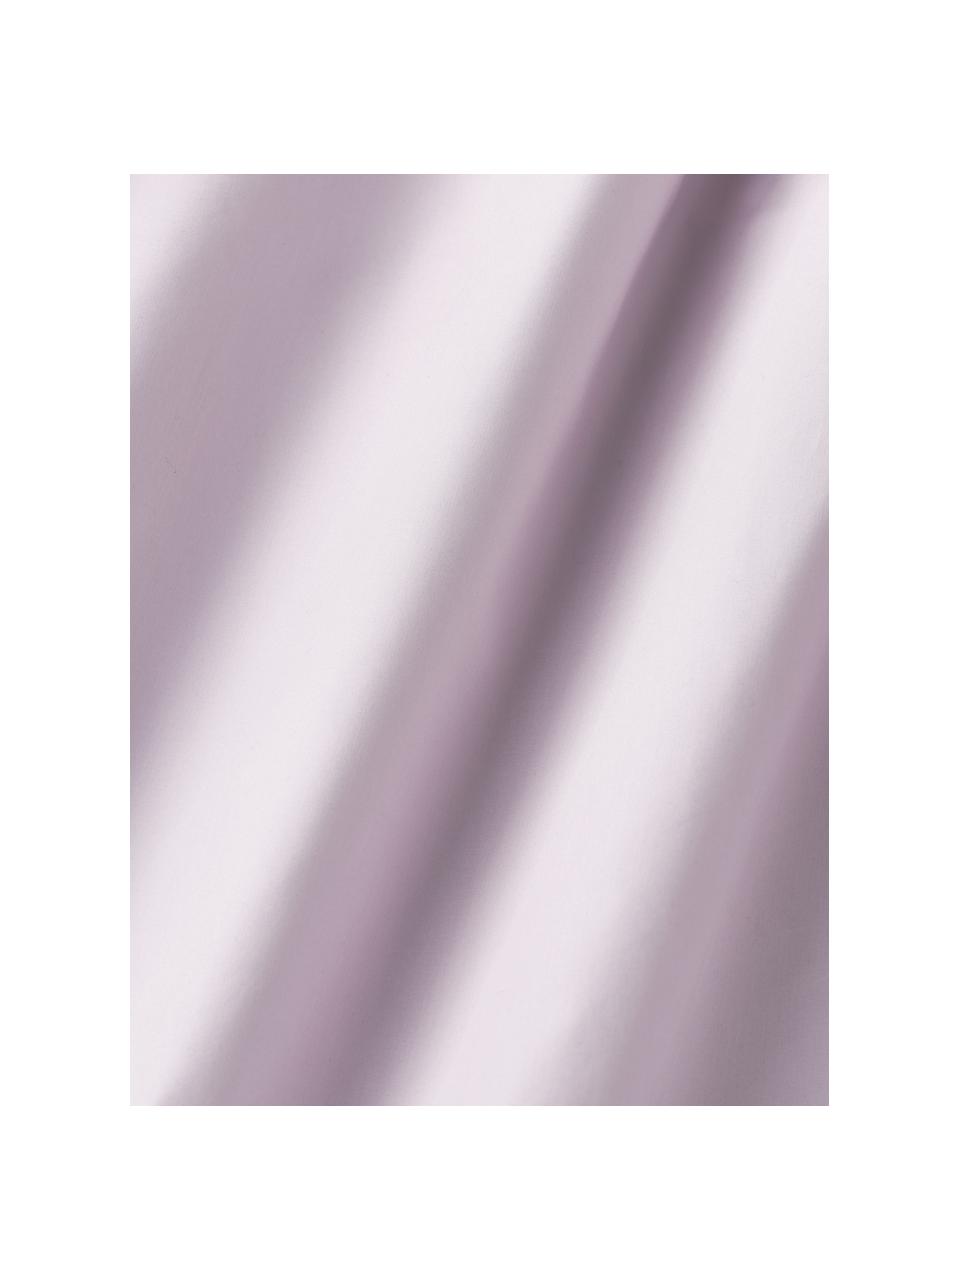 Topper hoeslaken Elsie, katoen perkal, Weeftechniek: perkal Draaddichtheid 200, Lavendel, B 160 x L 200 cm, H 15 cm